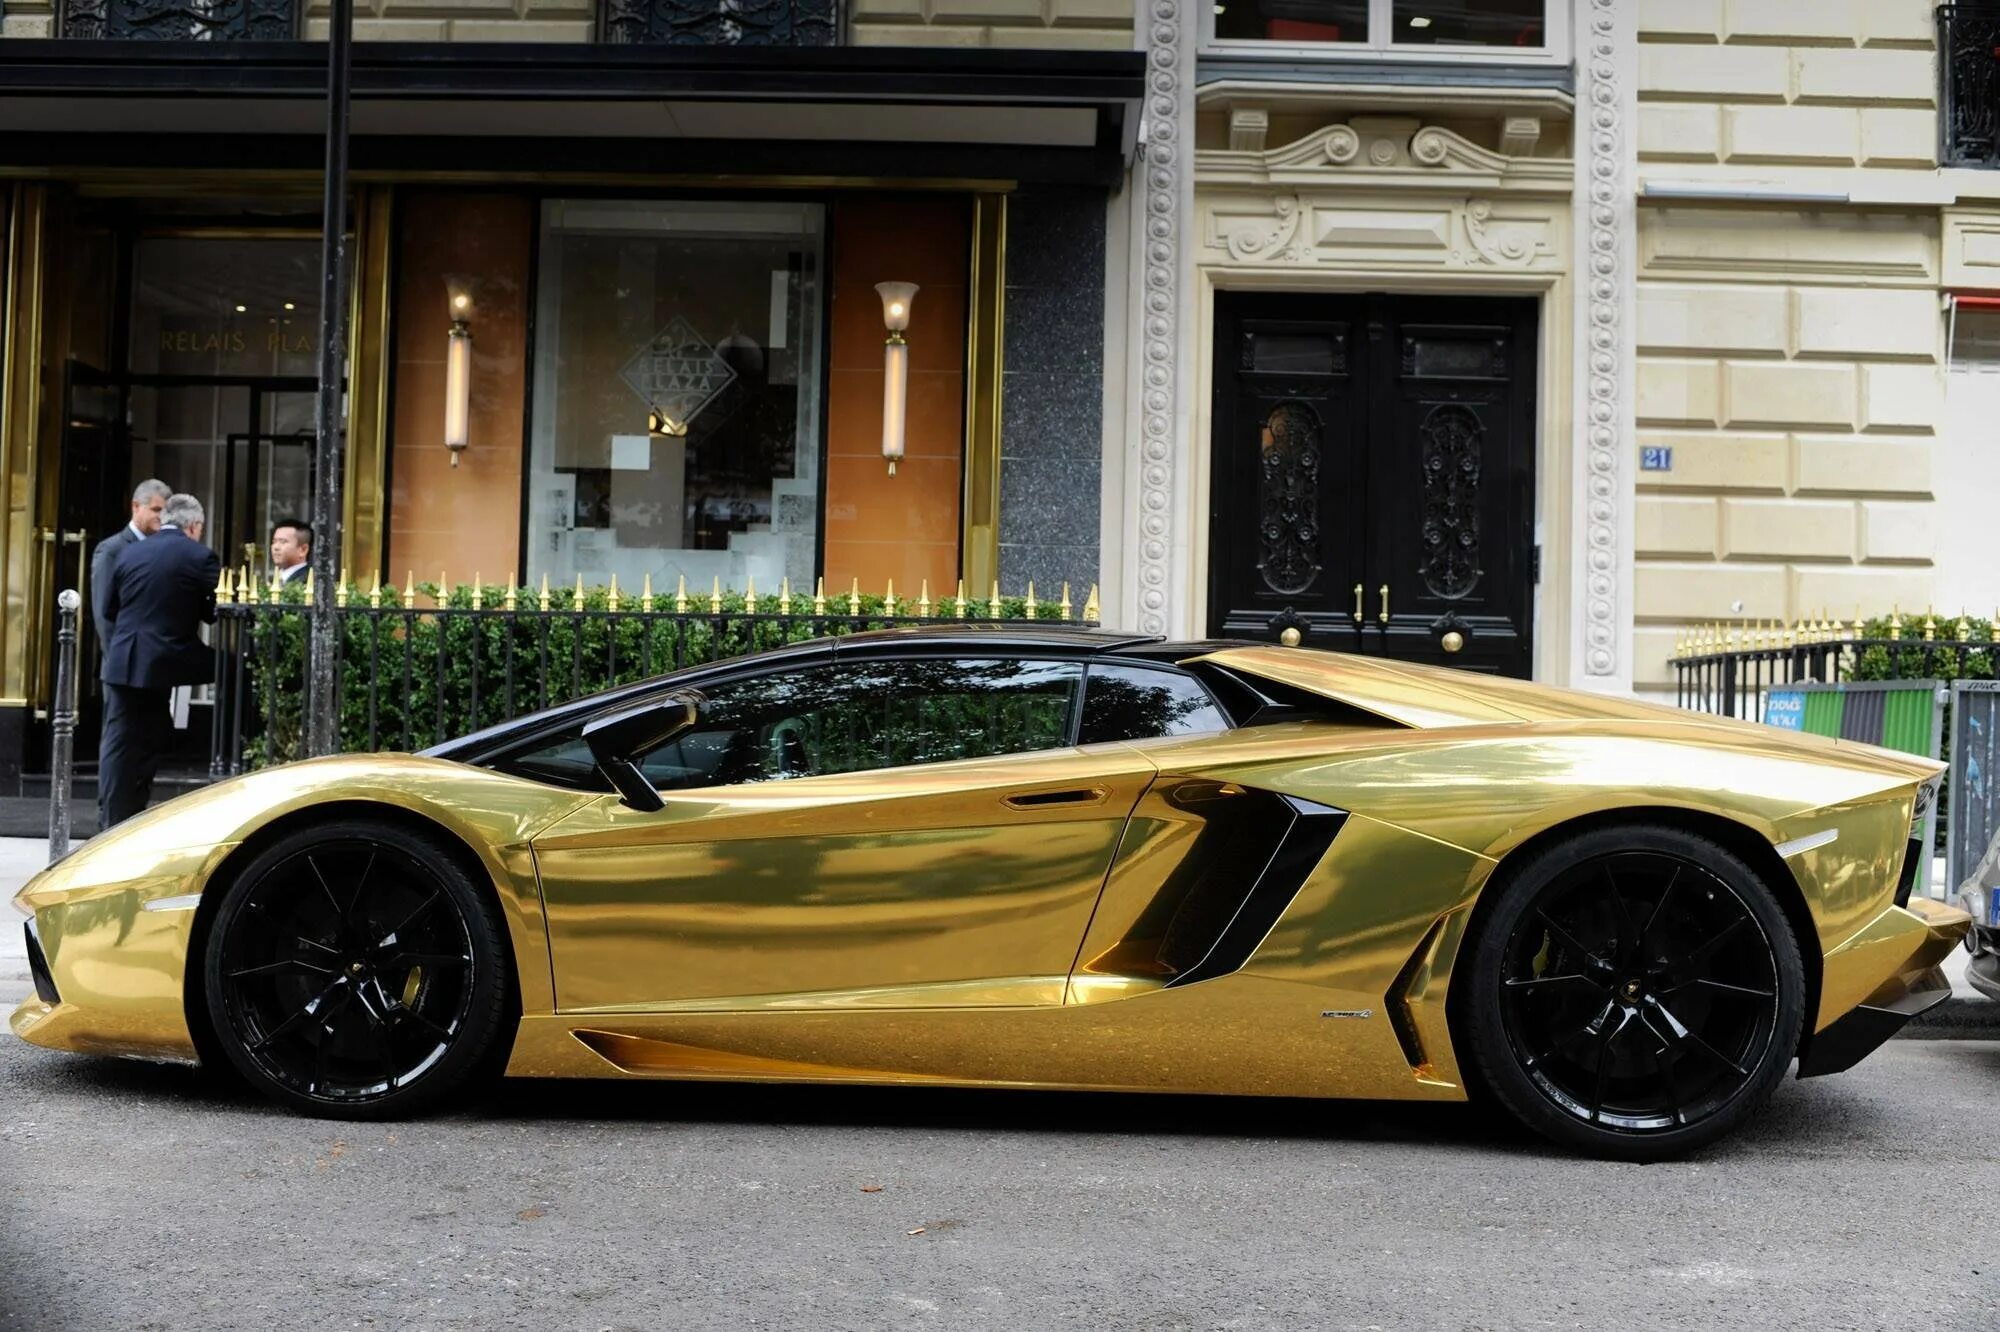 Expensive gold. Lamborghini Aventador lp700-4 Золотая. Золотой Lamborghini авентадор. Ламборджини авентадор Золотая Дубай. Ламборгини авентадор шейха Золотая.